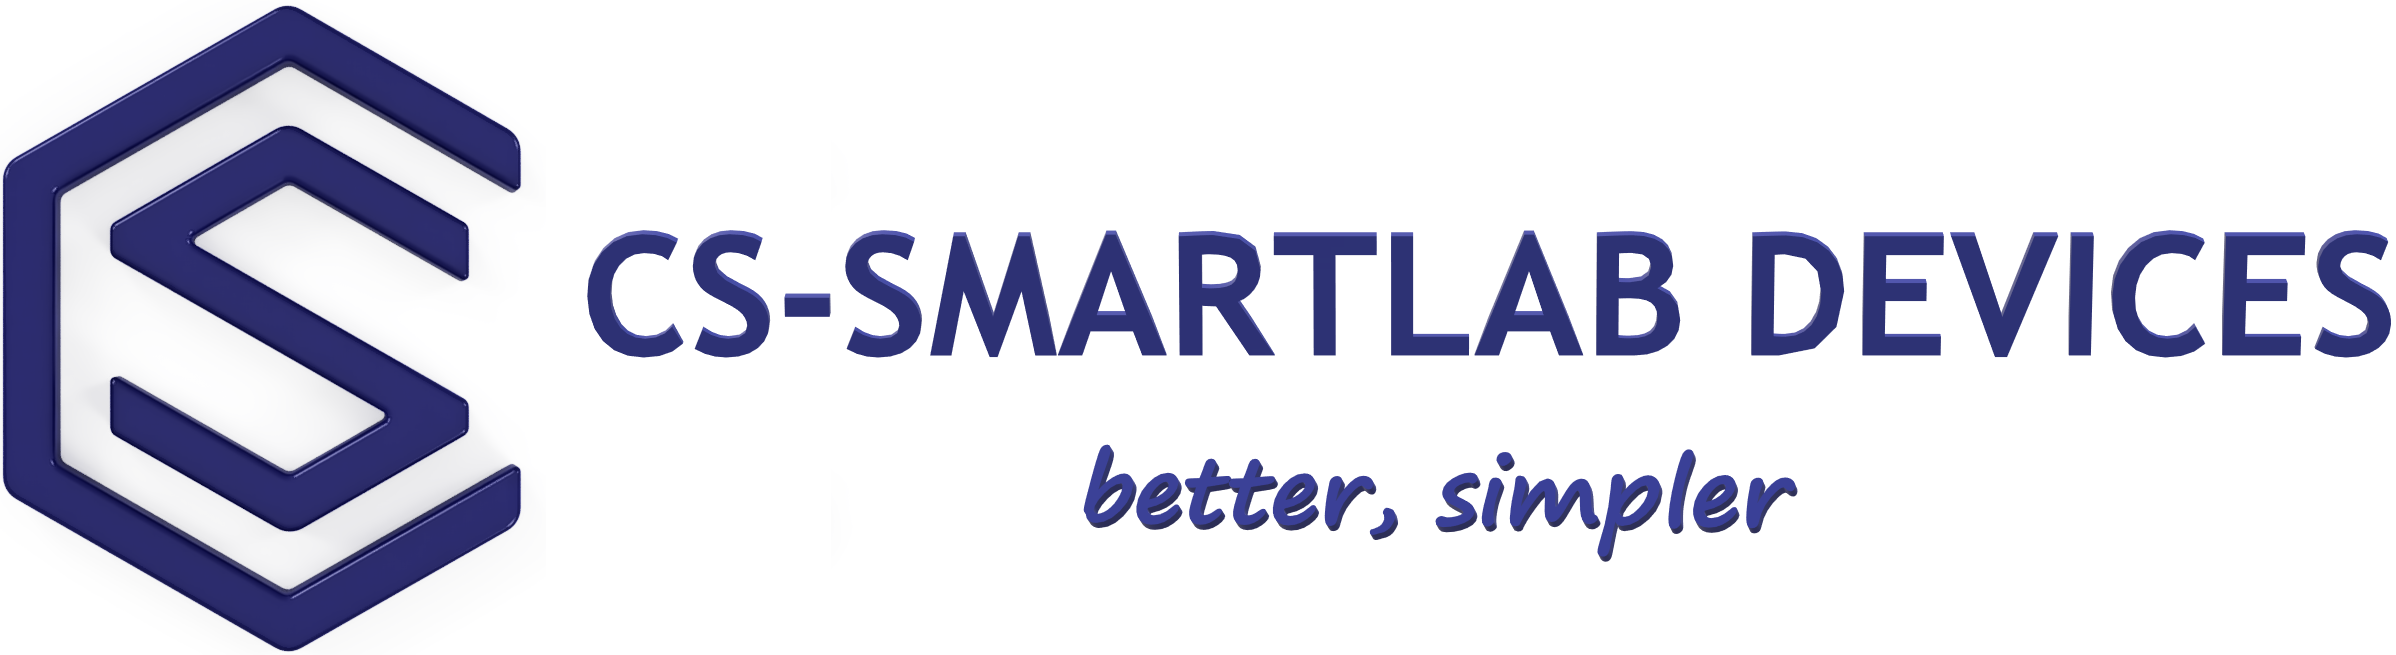 CS-Smartlab Devices 